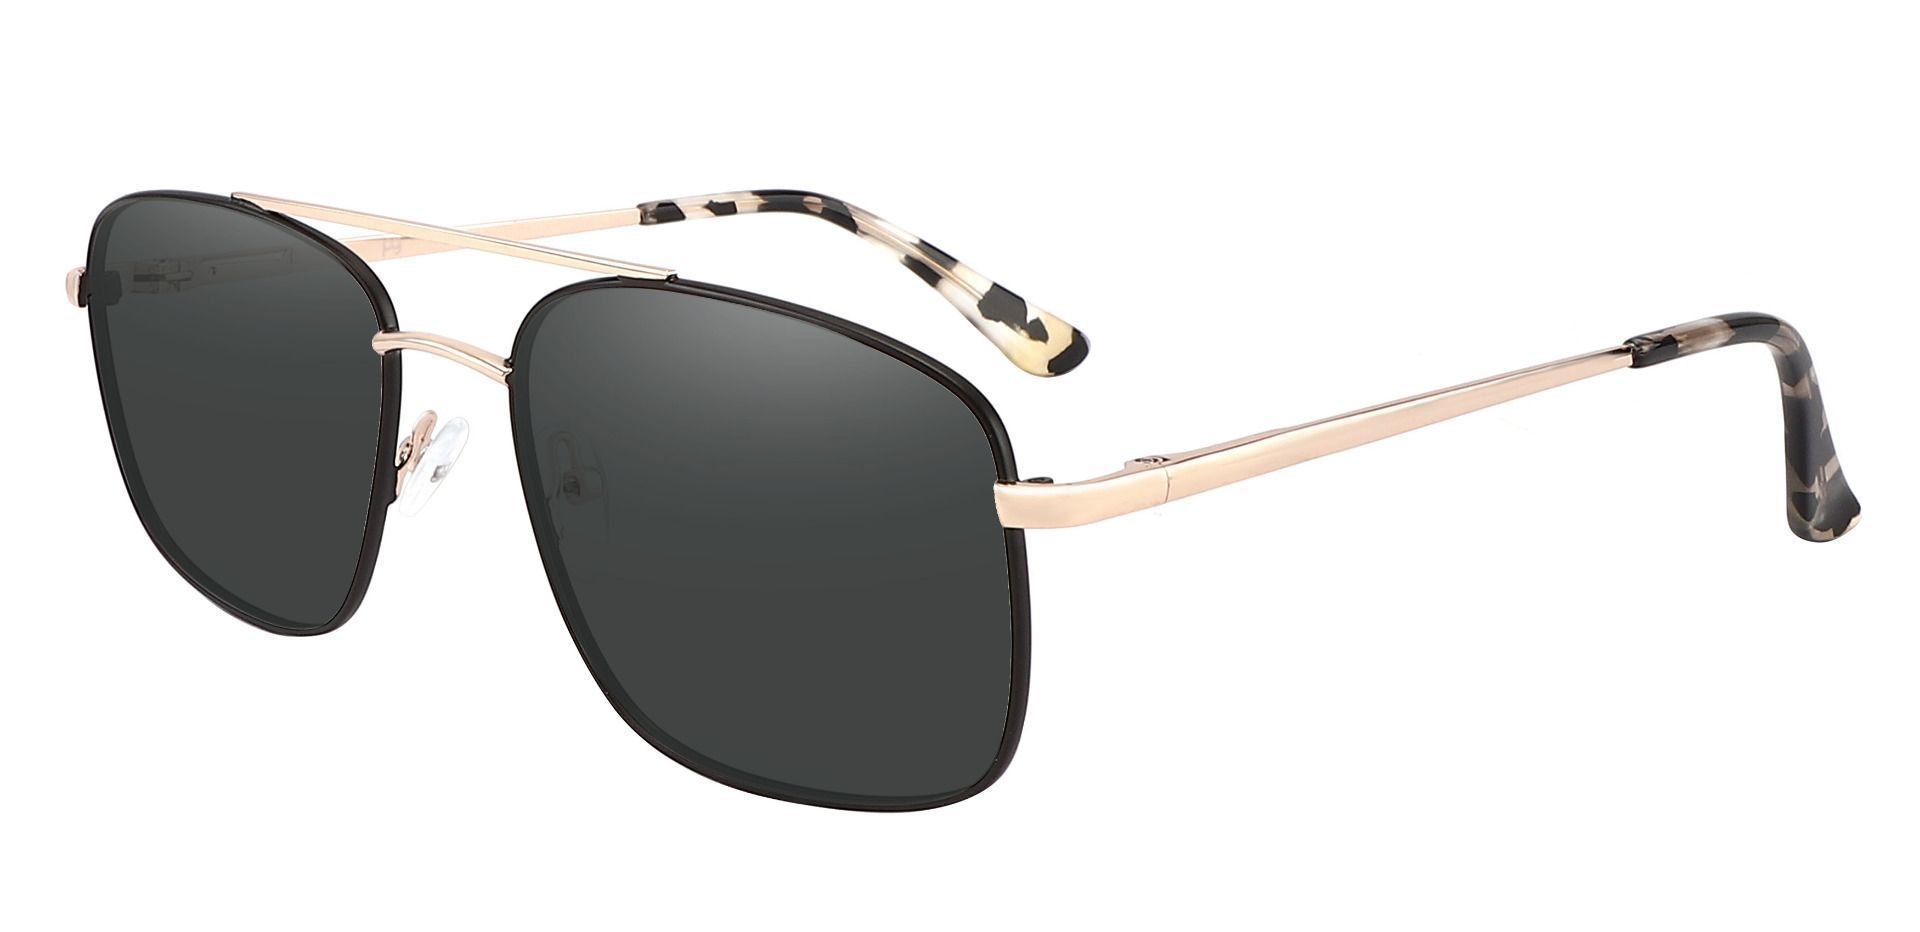 Hiram Aviator Non-Rx Sunglasses - Black Frame With Gray Lenses